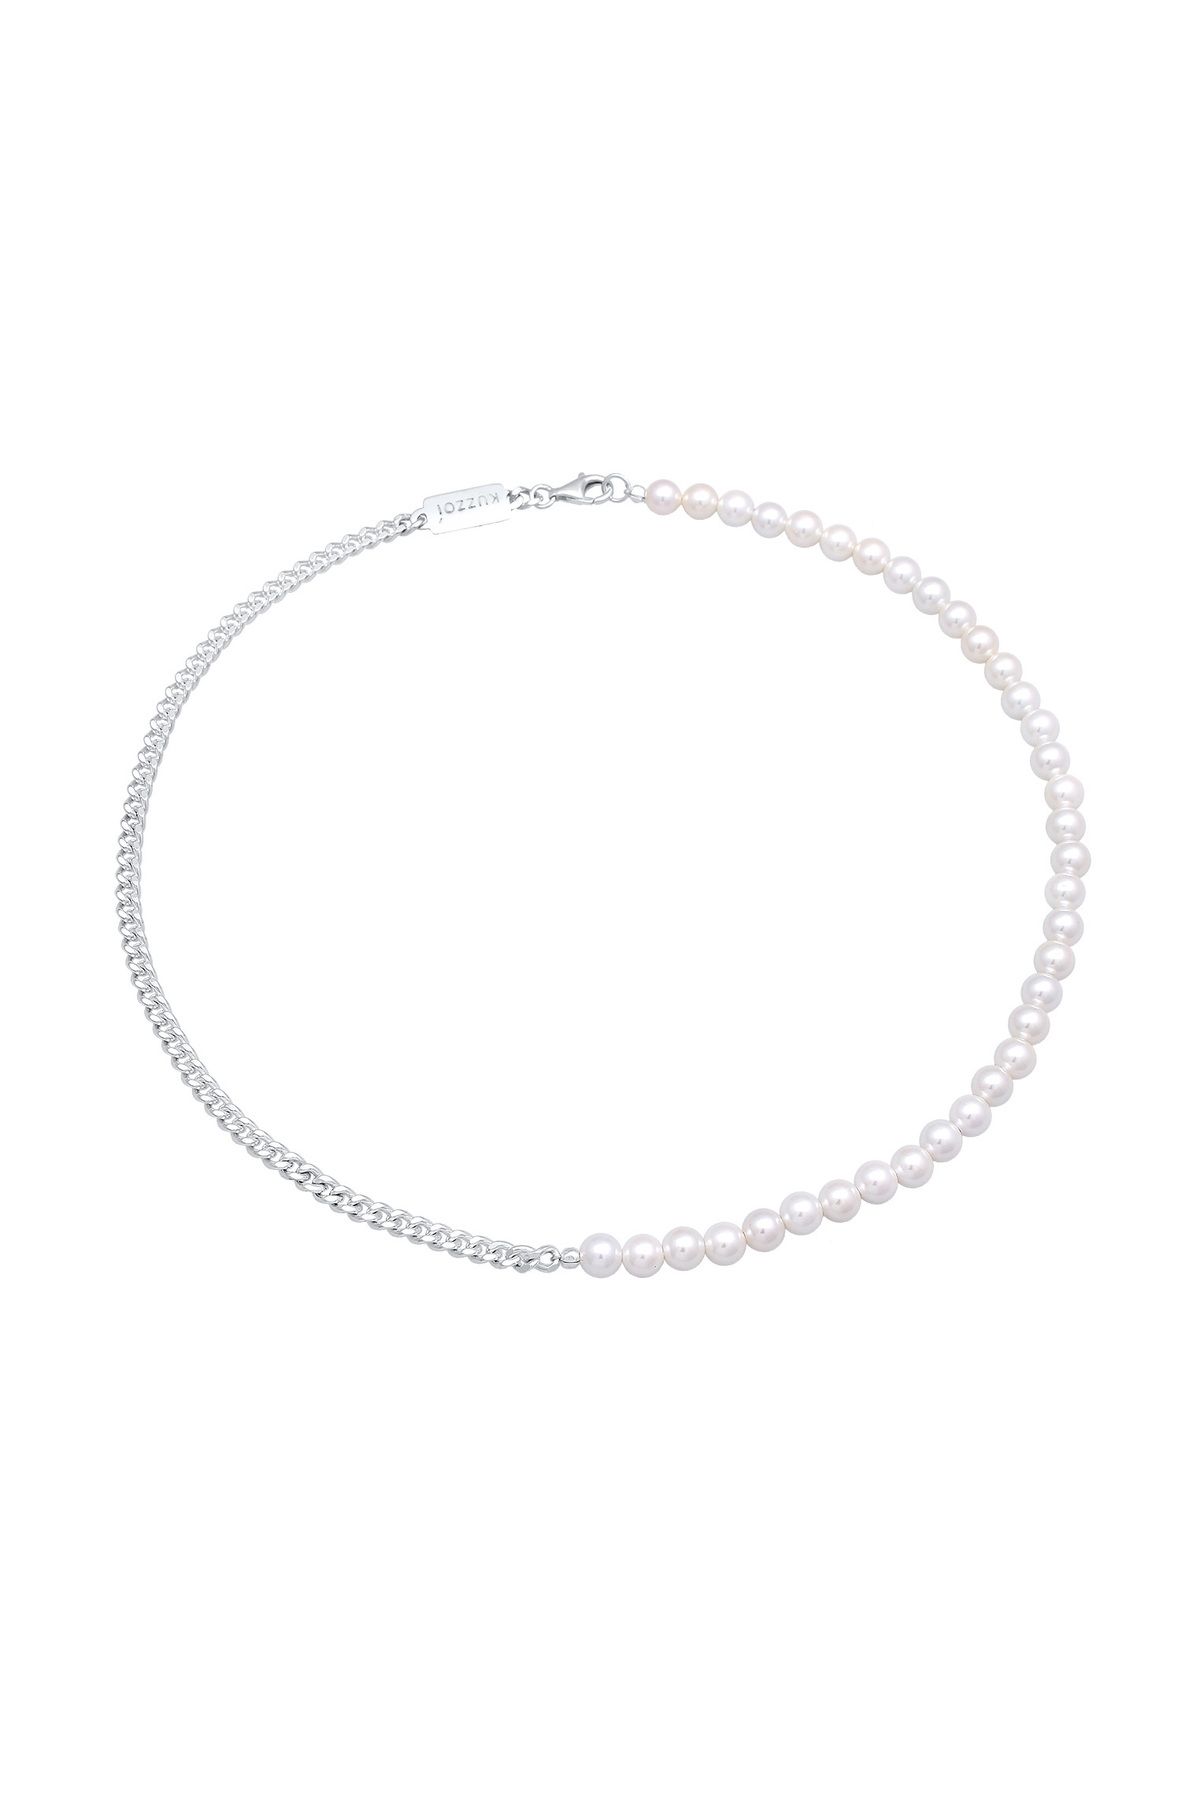 KUZZOI Halskette Silber Panzerkette 925 - Massiv Männer Trendyol Basic Perlen